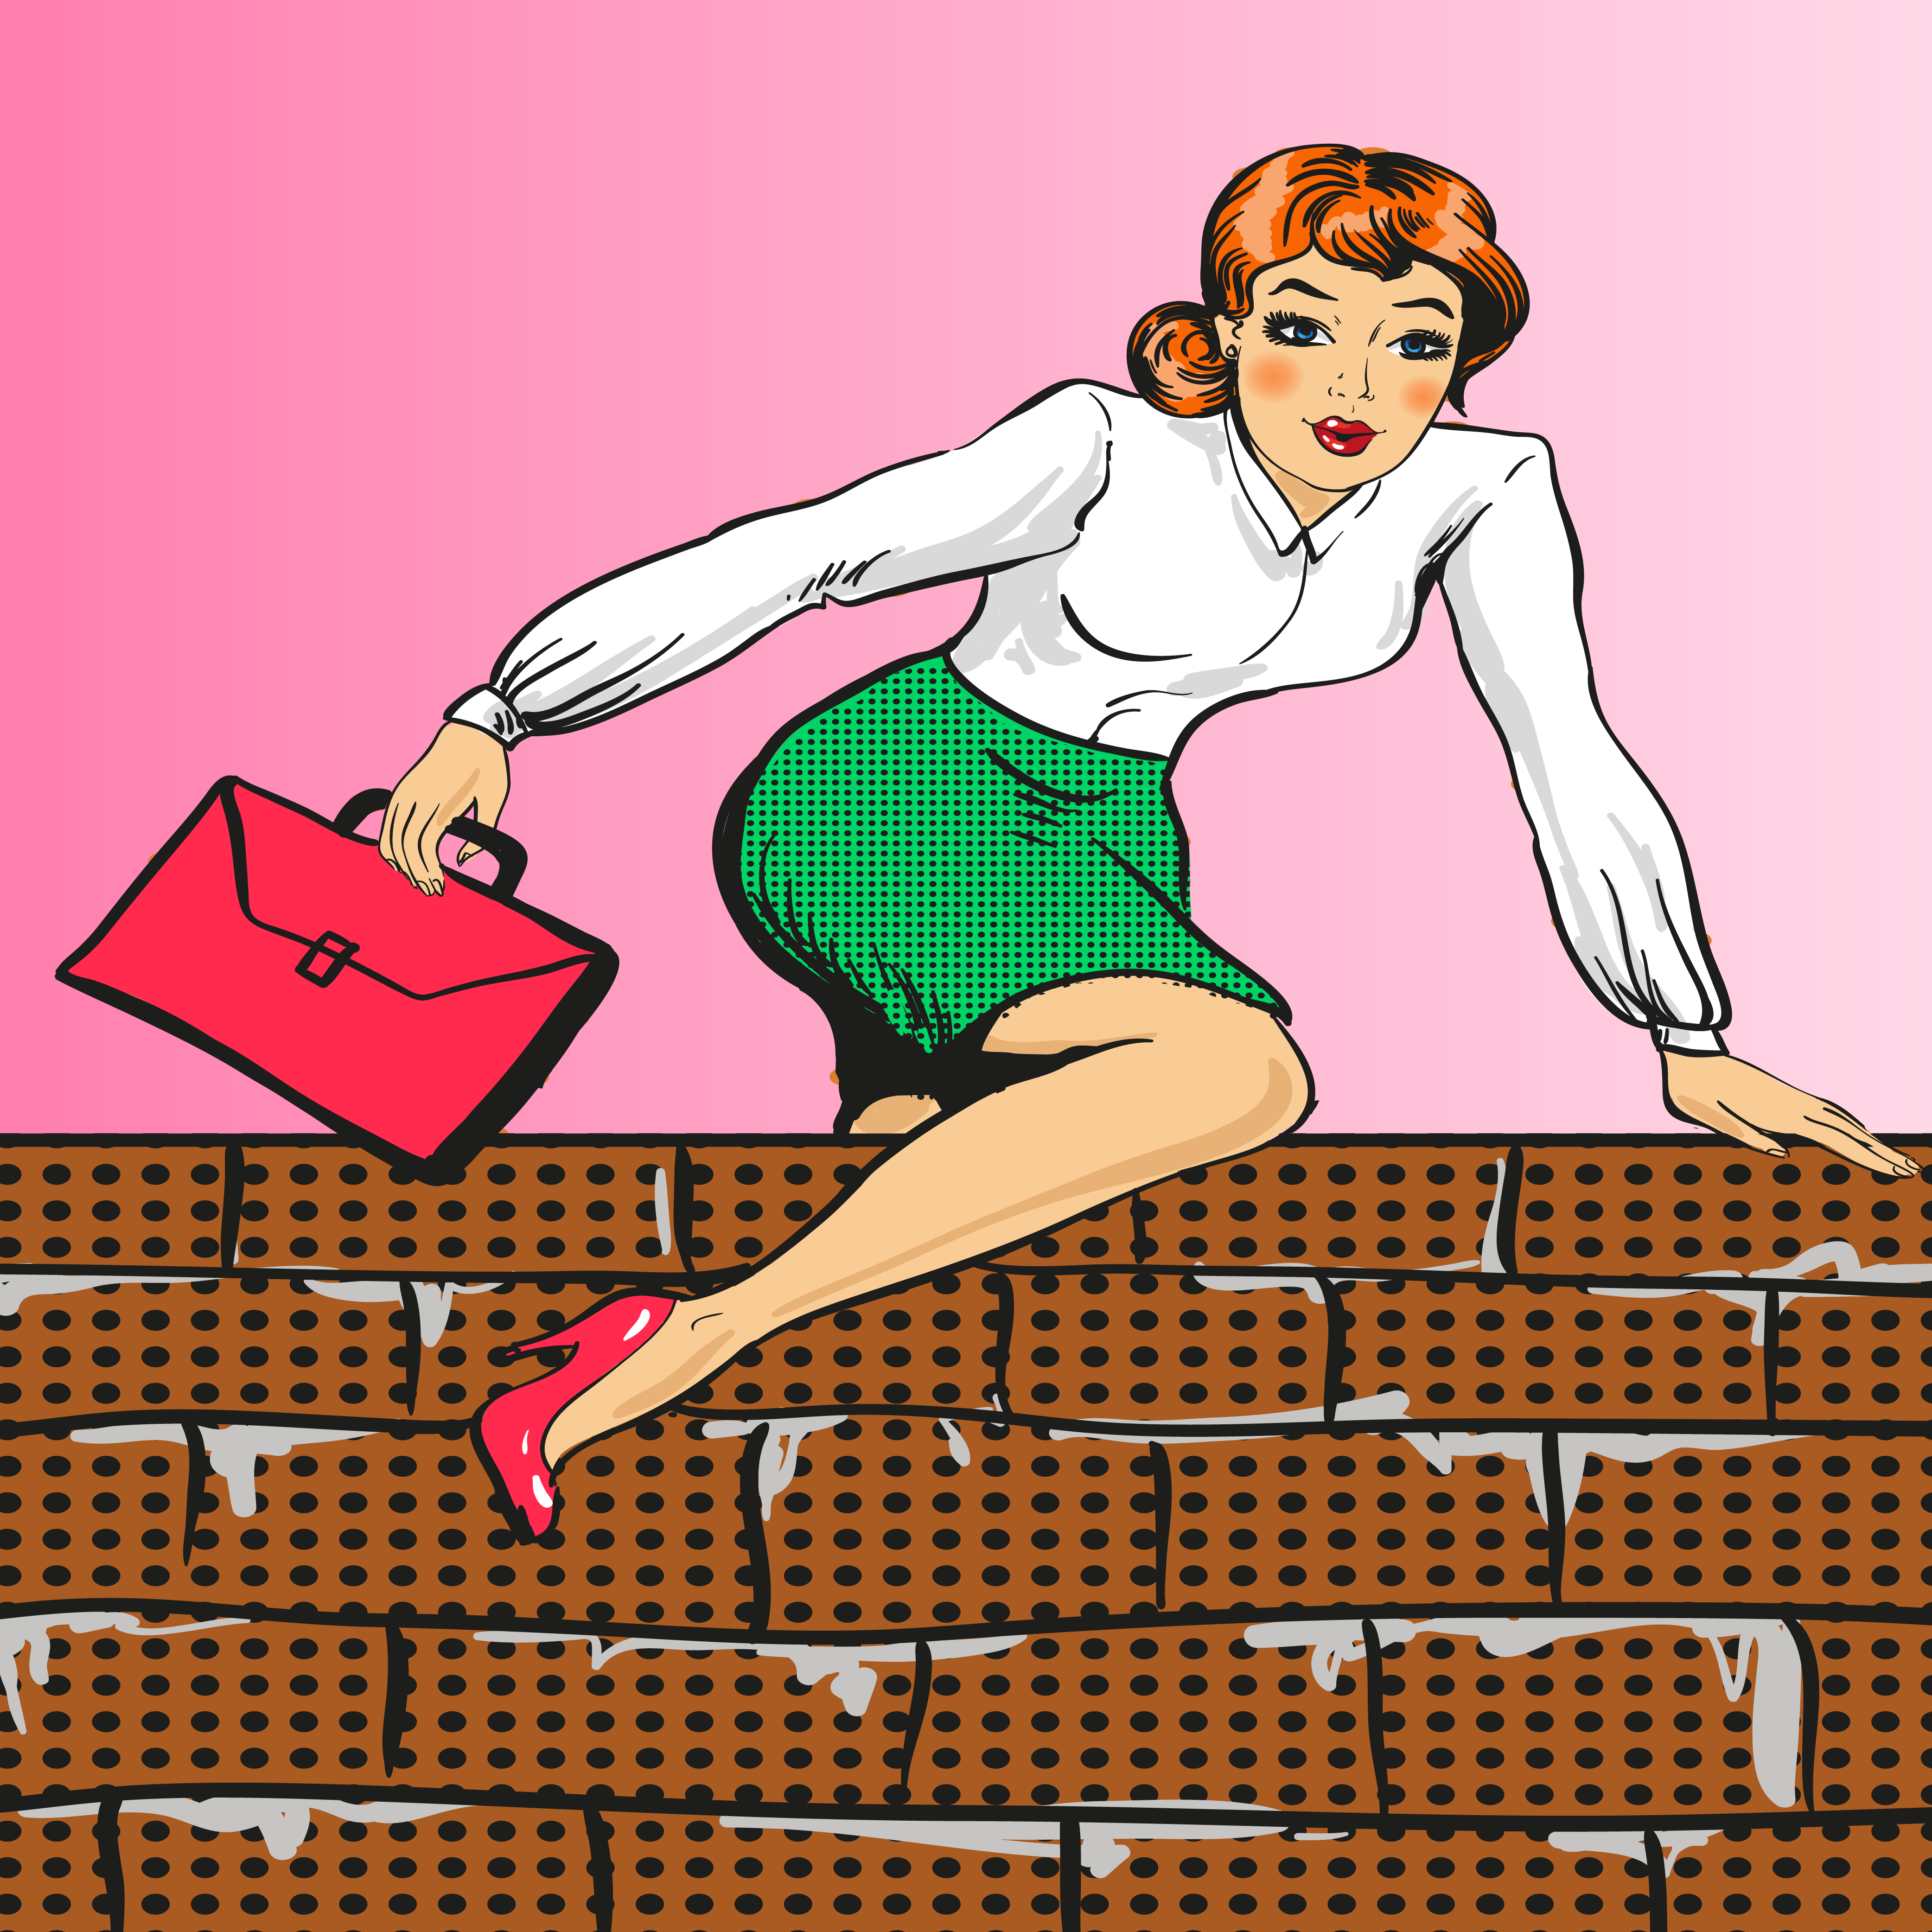 pop art image of woman climbing over brick wall